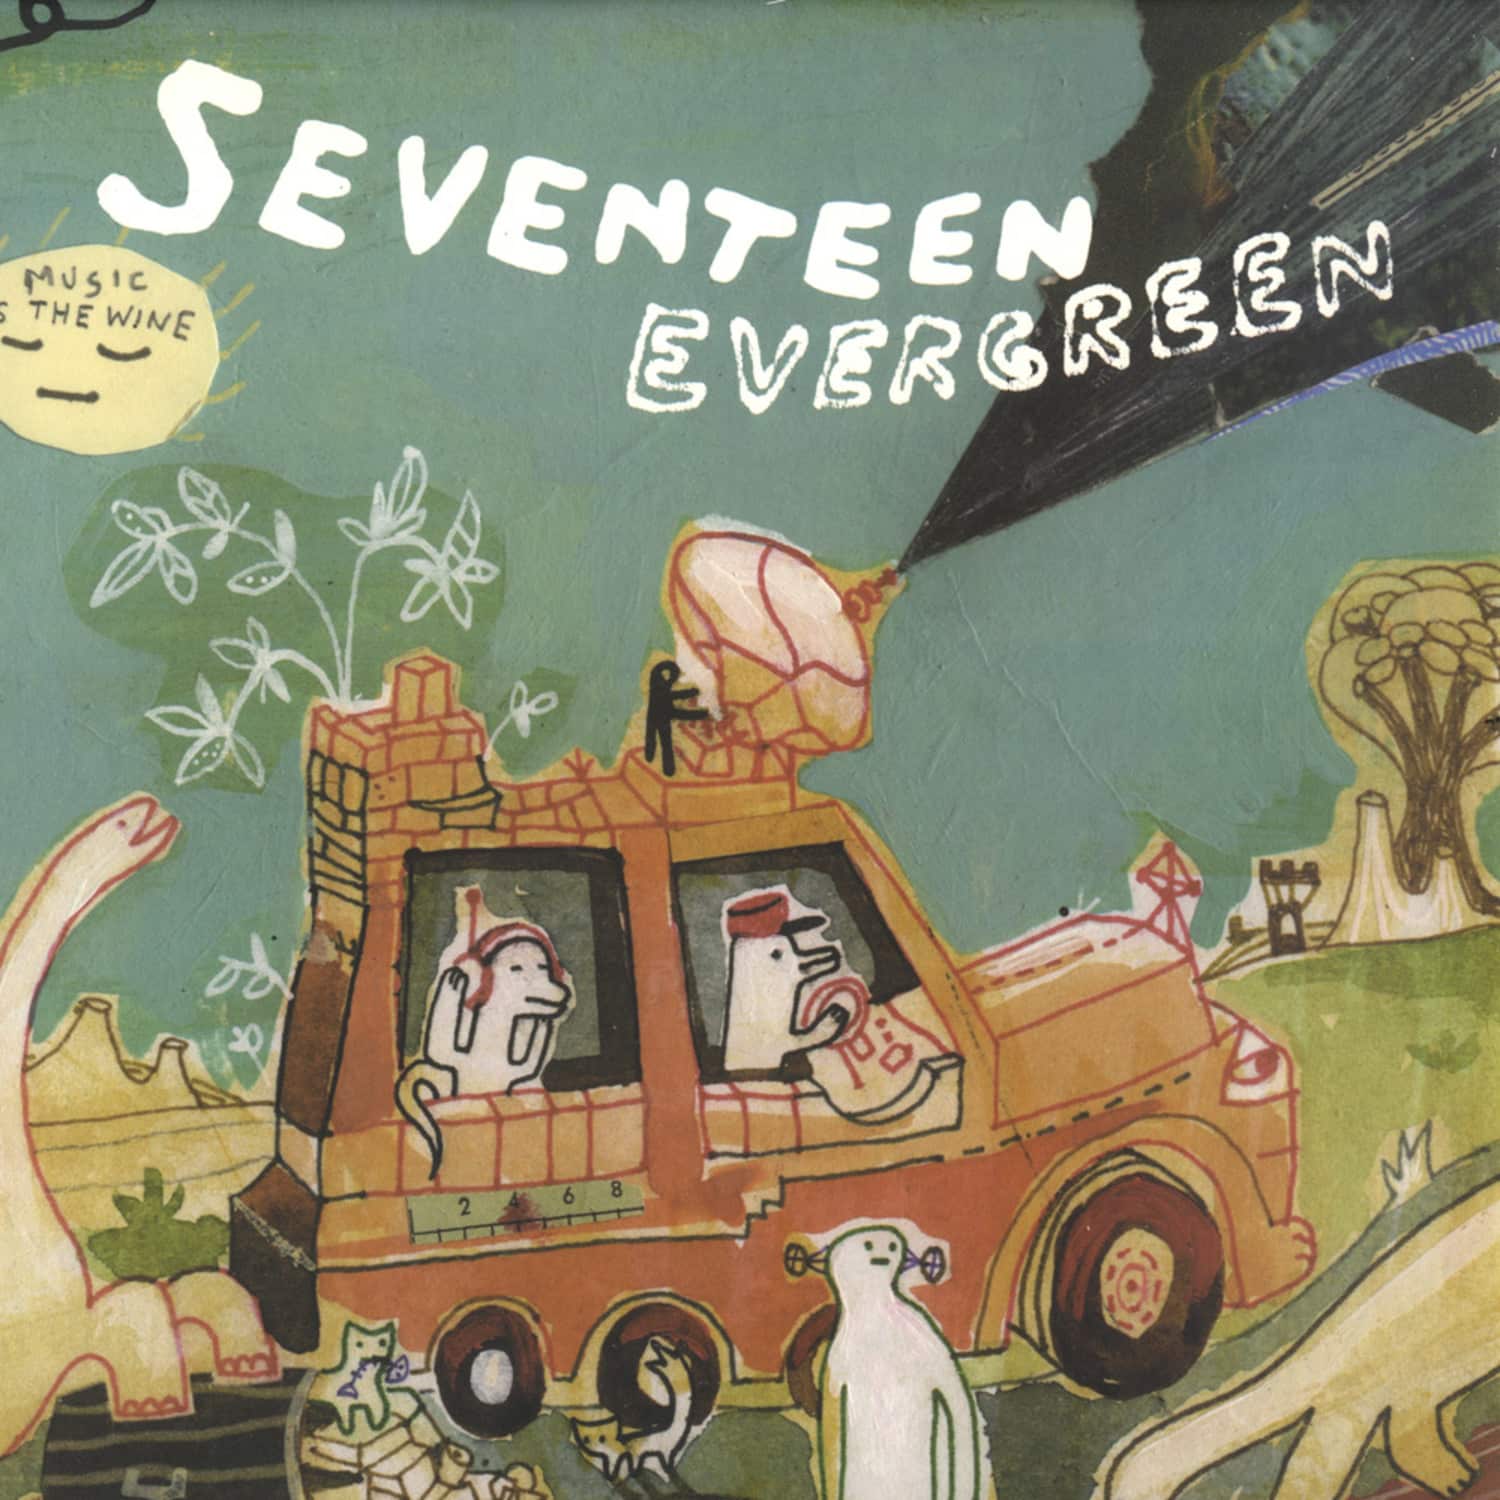 Seventeen Evergreen - MUSIC IS THE WINE